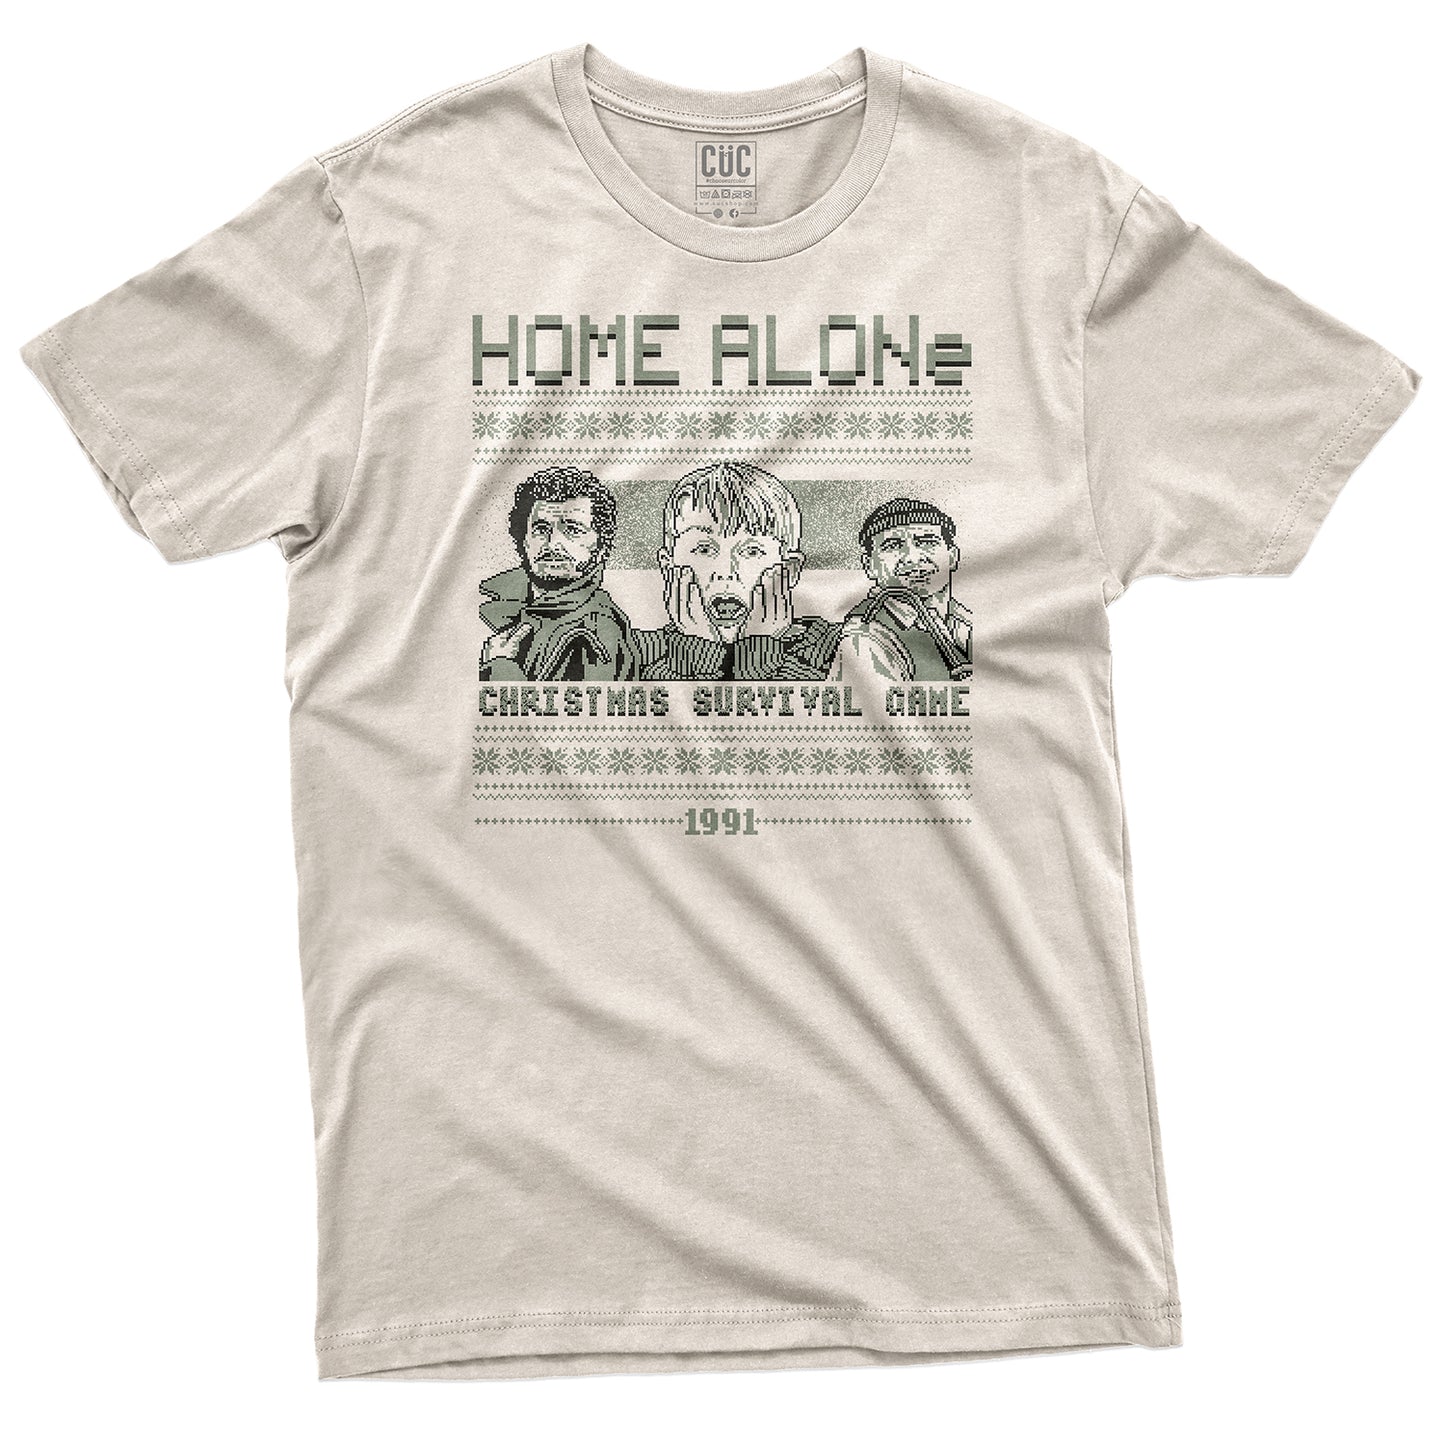 CUC T-Shirt HOME ALONE VG - Retro Games - Natale #chooseurcolor